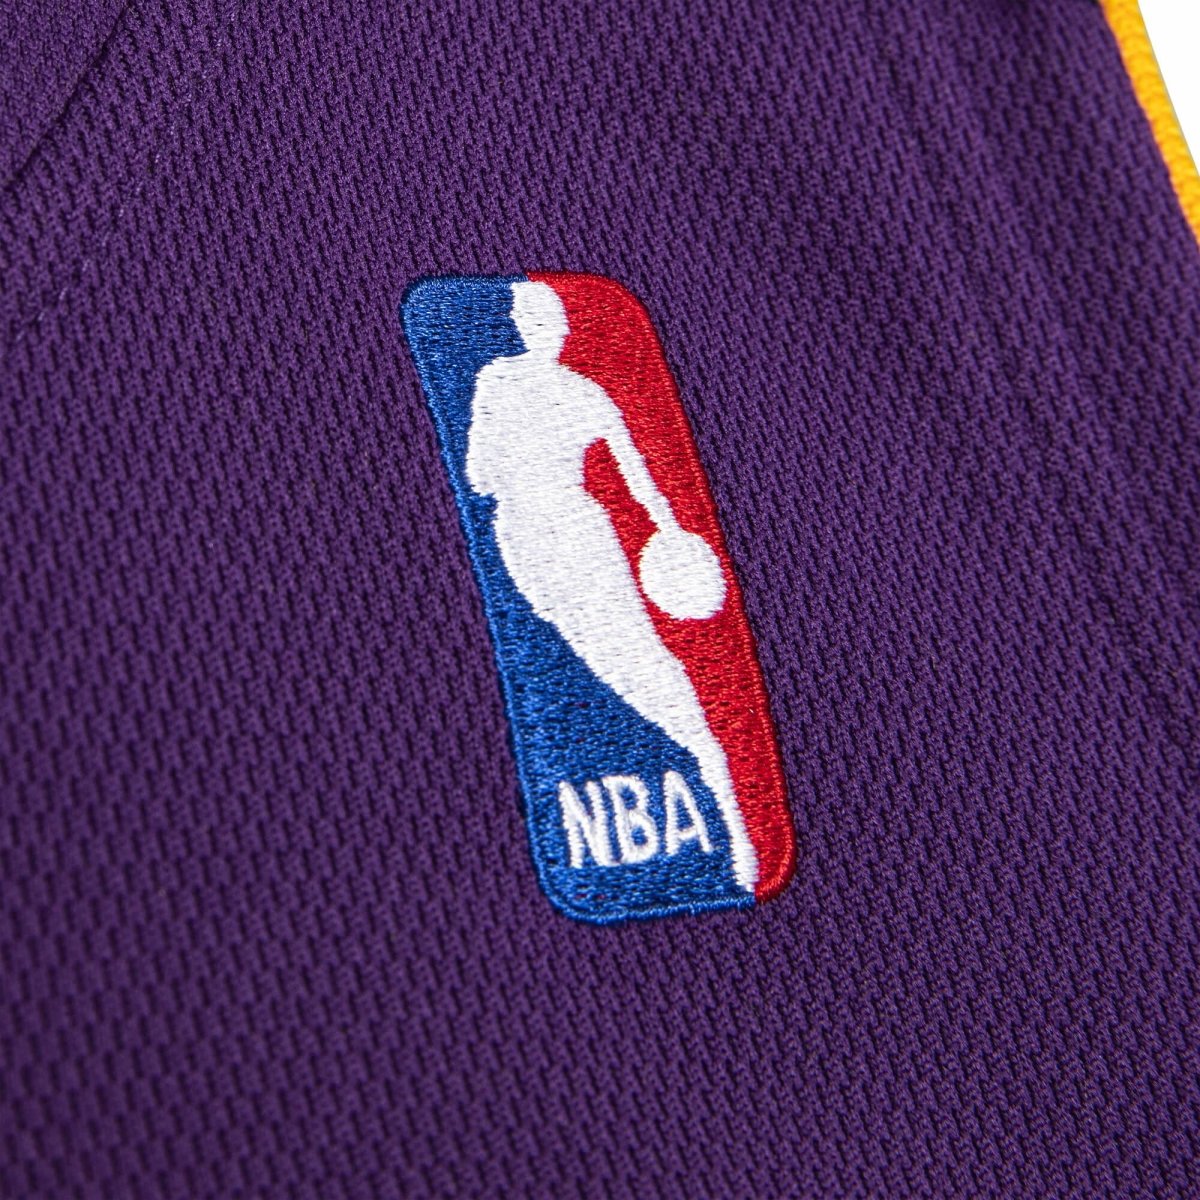 Men's Los Angeles Lakers Kobe Bryant Mitchell & Ness Gold/Purple 1999-00  Hardwood Classics Authentic